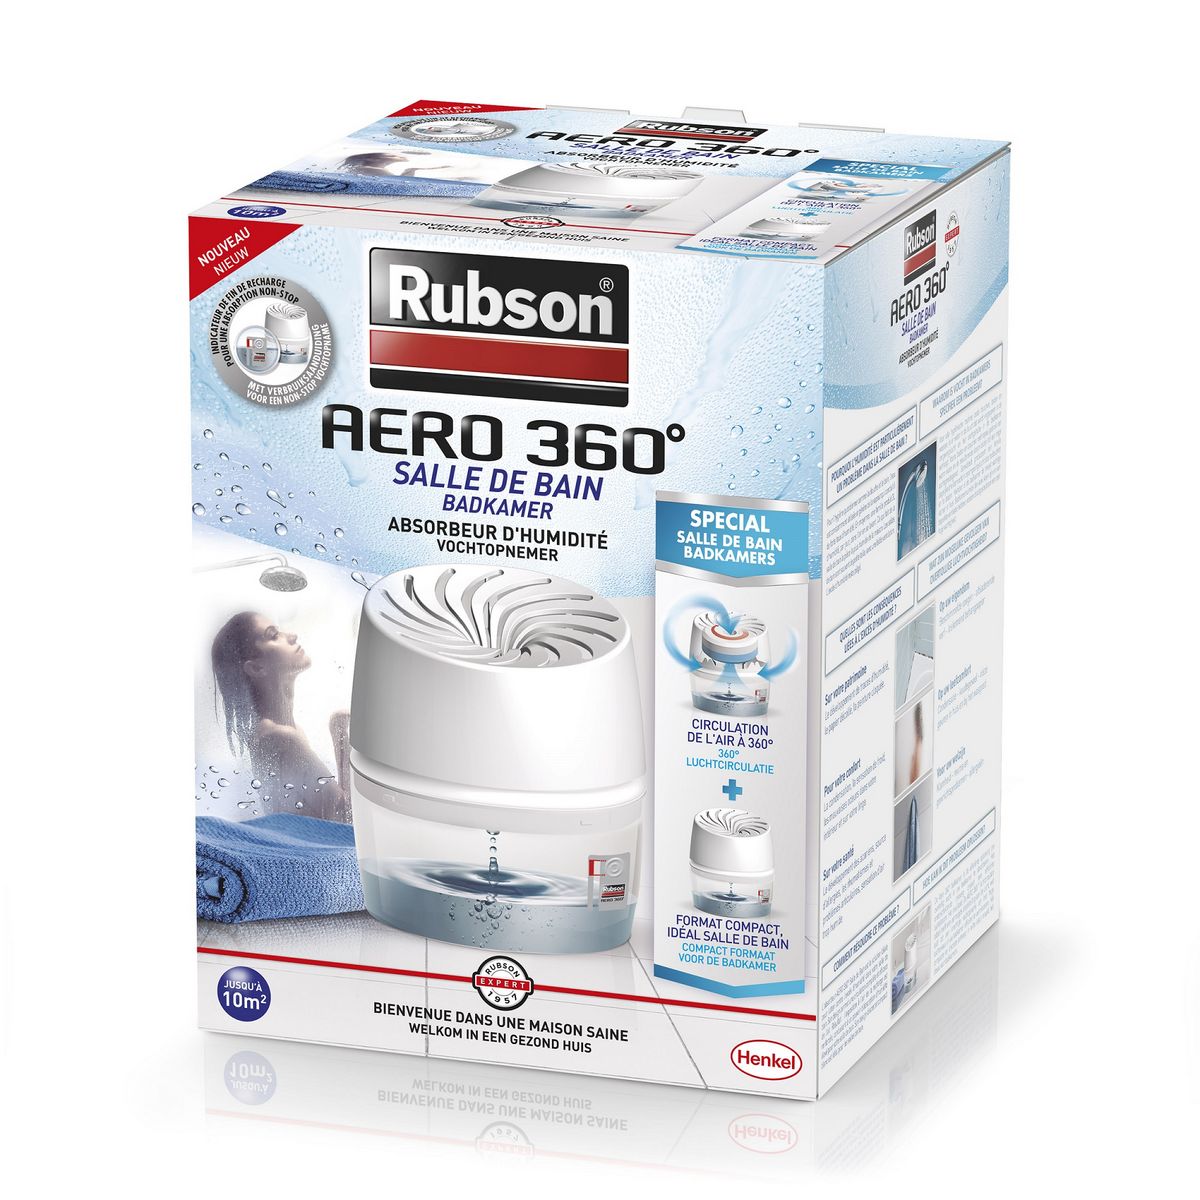 RUBSON Absorbeur d'humidité AERO 360 - Spécial salle de bain pas cher 